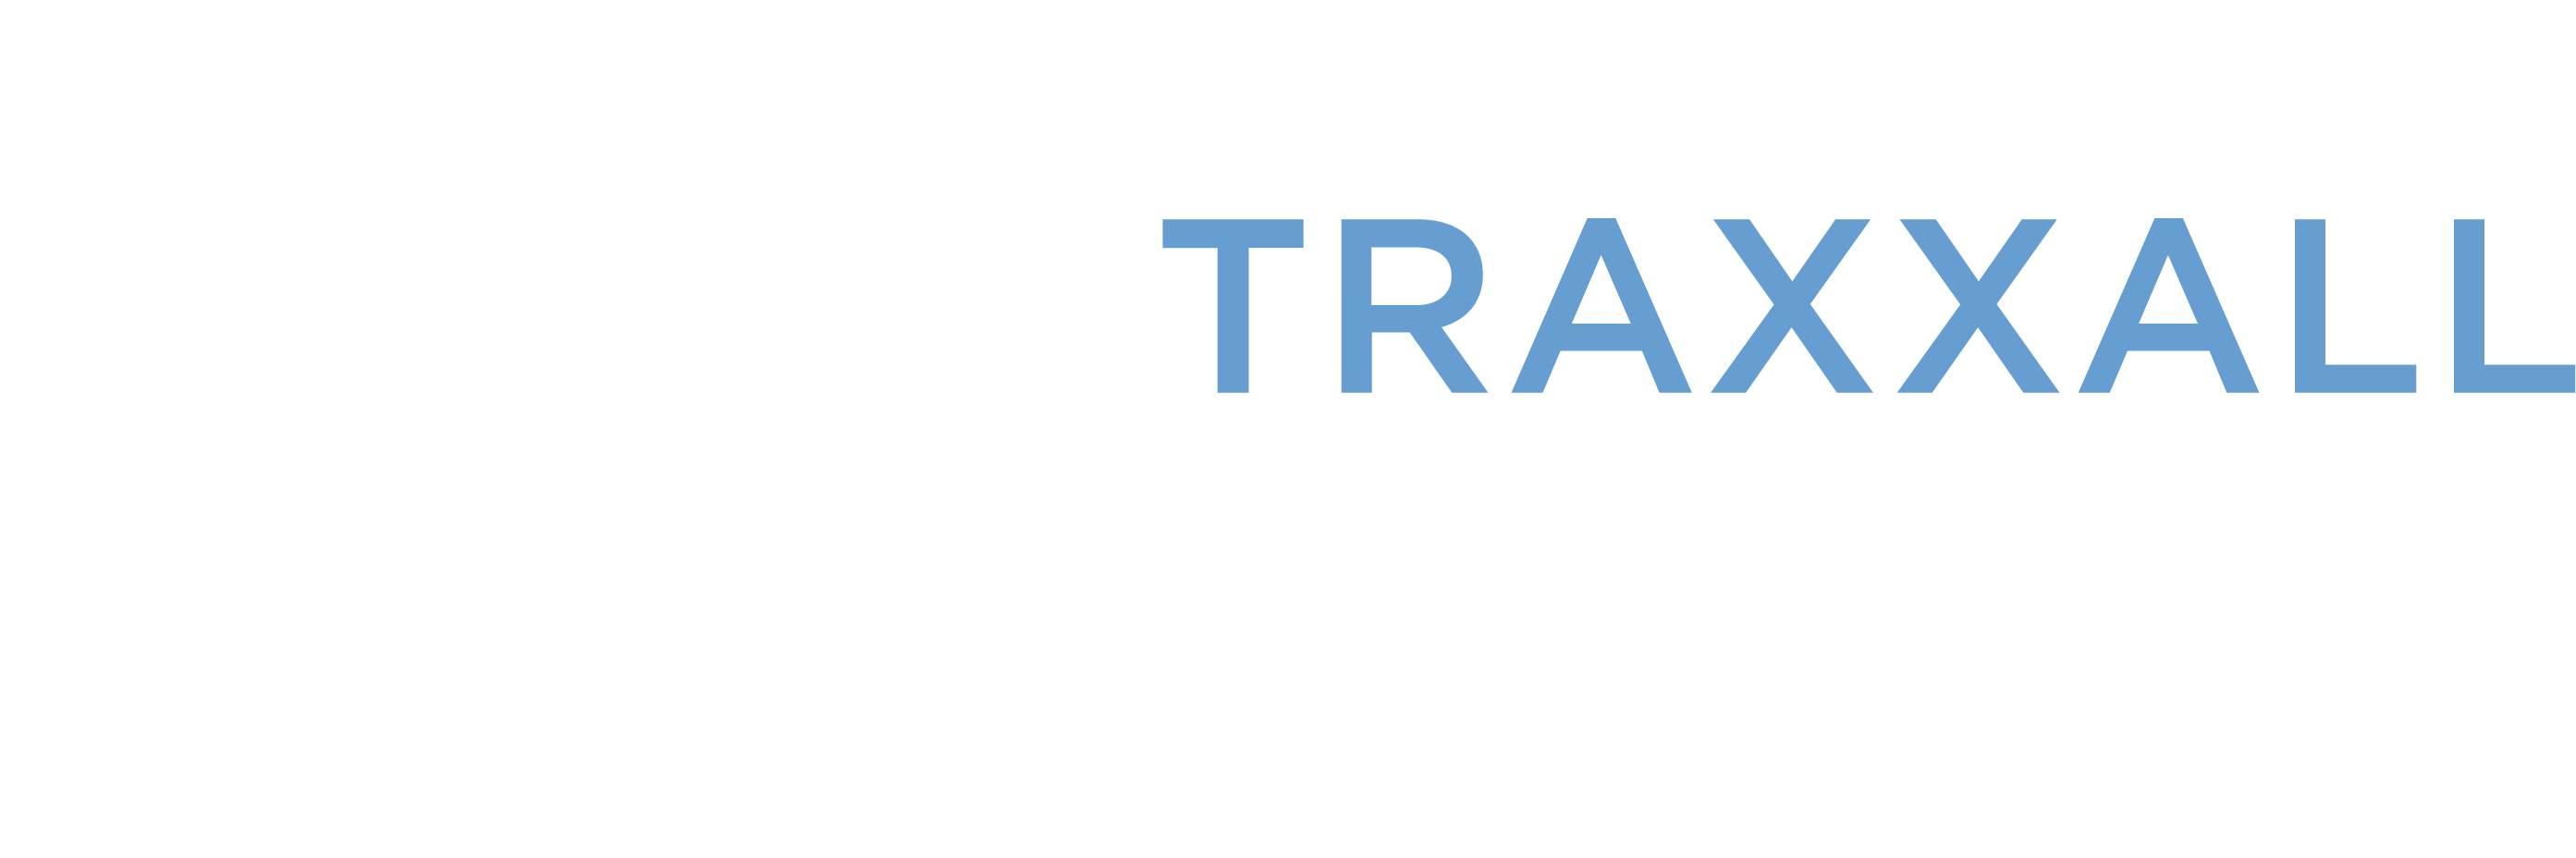 Traxxall Aviator Logo